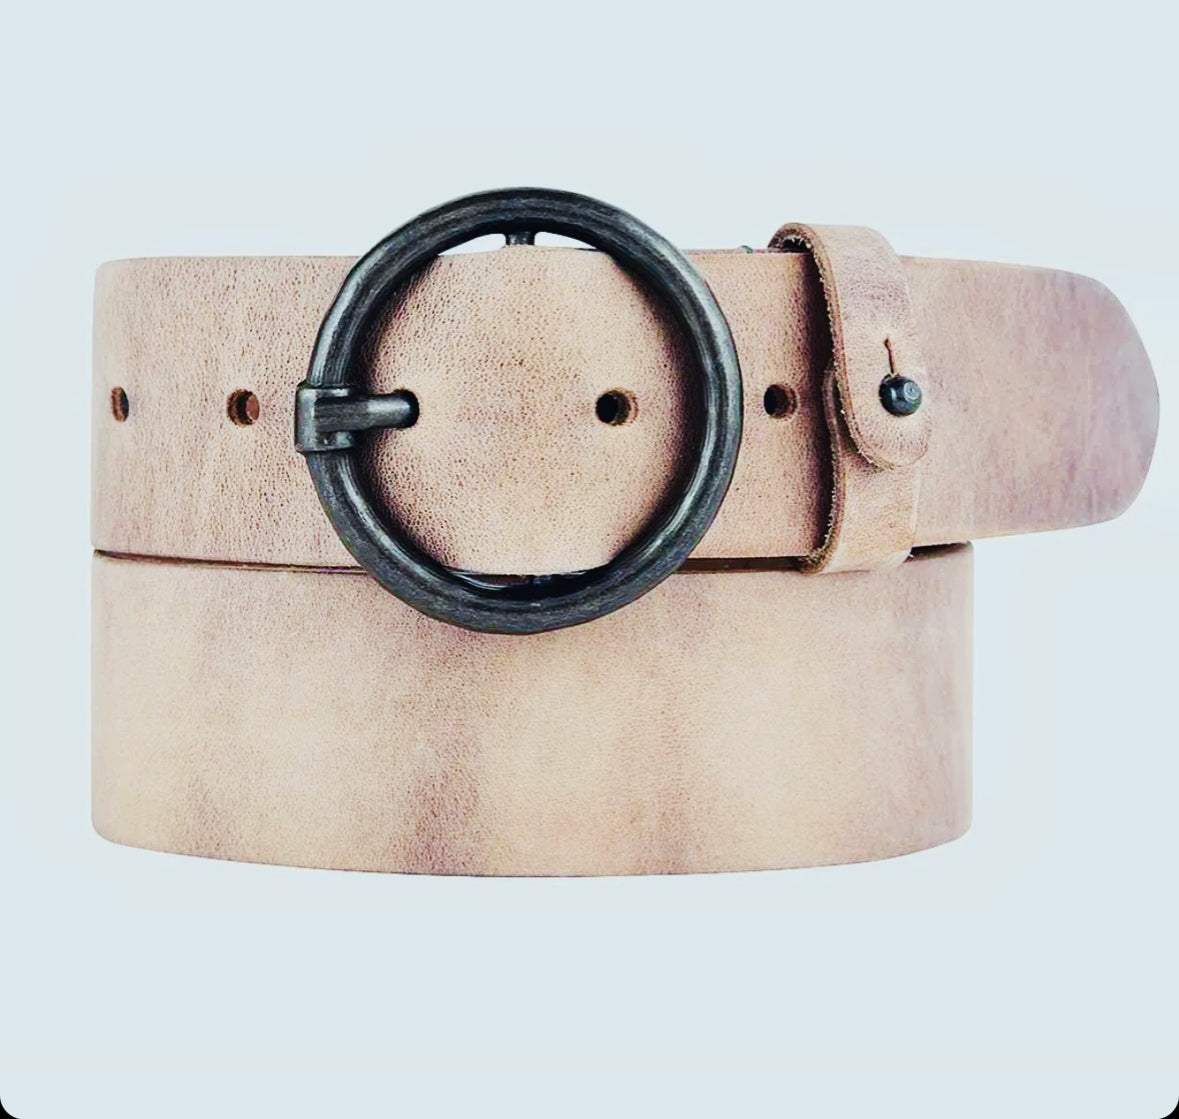 Pip Leather Belt